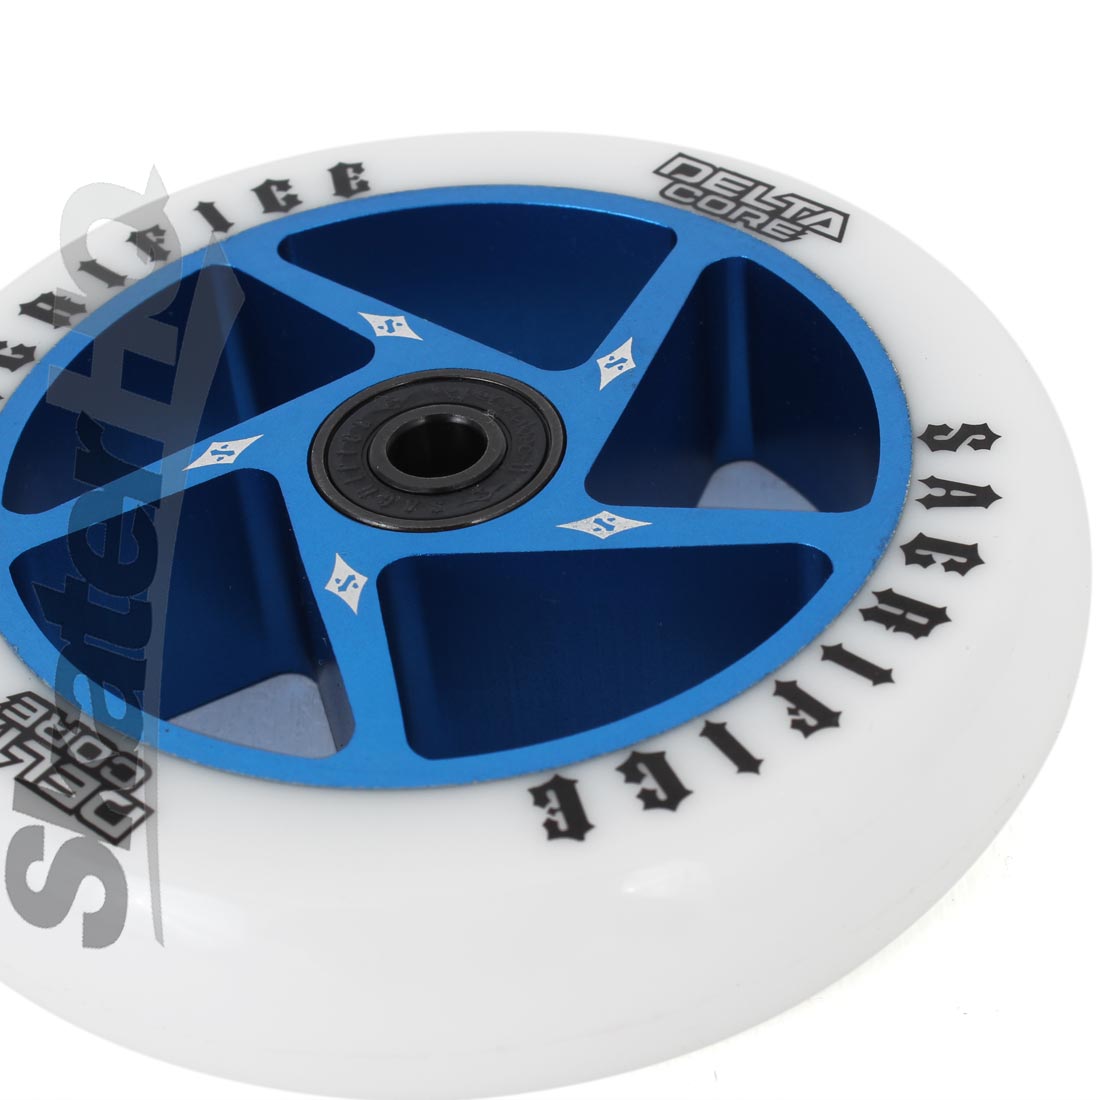 Sacrifice Delta Core 110mm Wheel - White/Blue Scooter Wheels